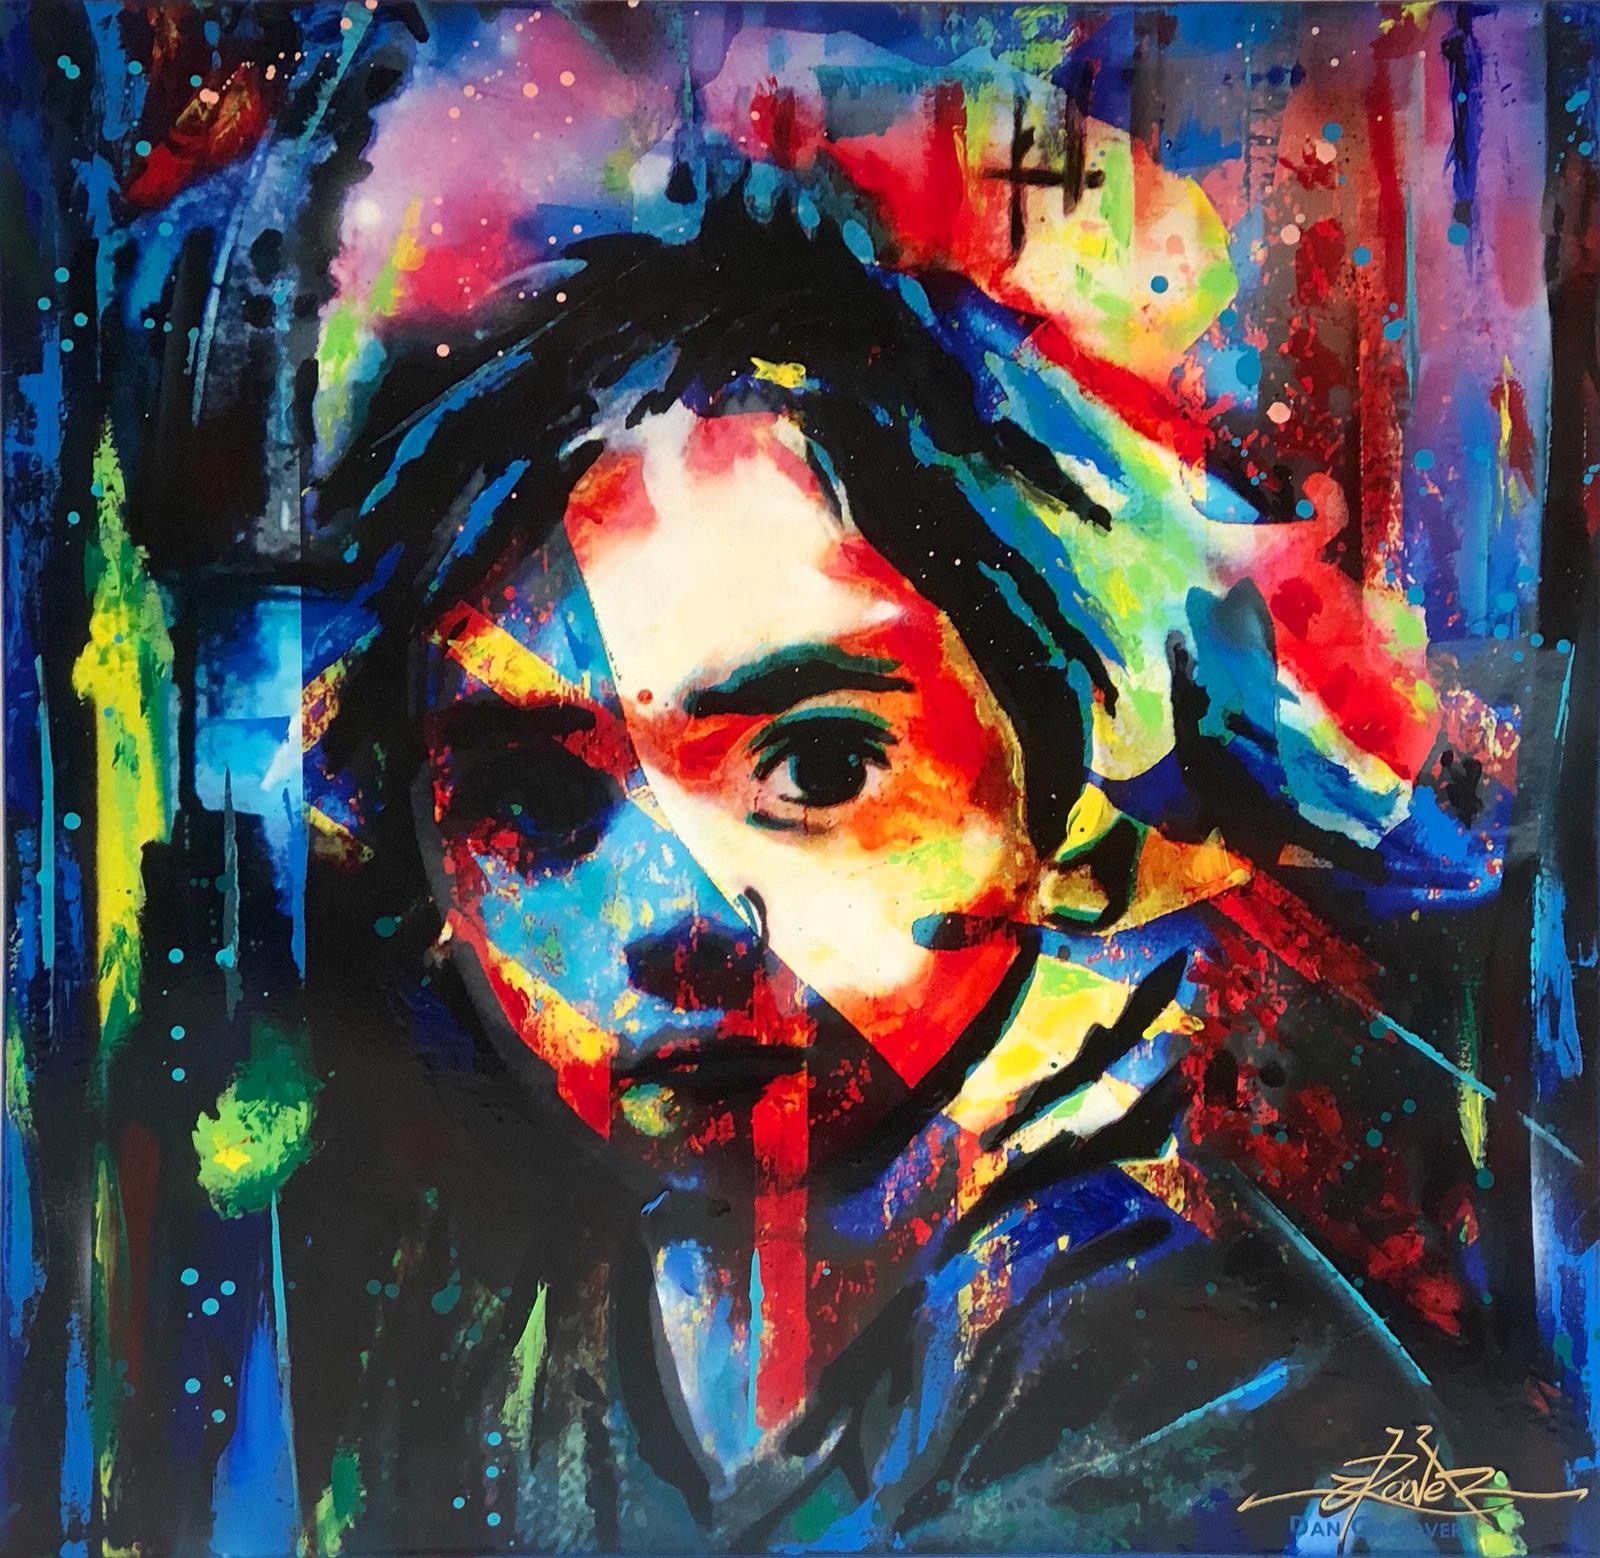  abstract art depicting sorrow innocence children 